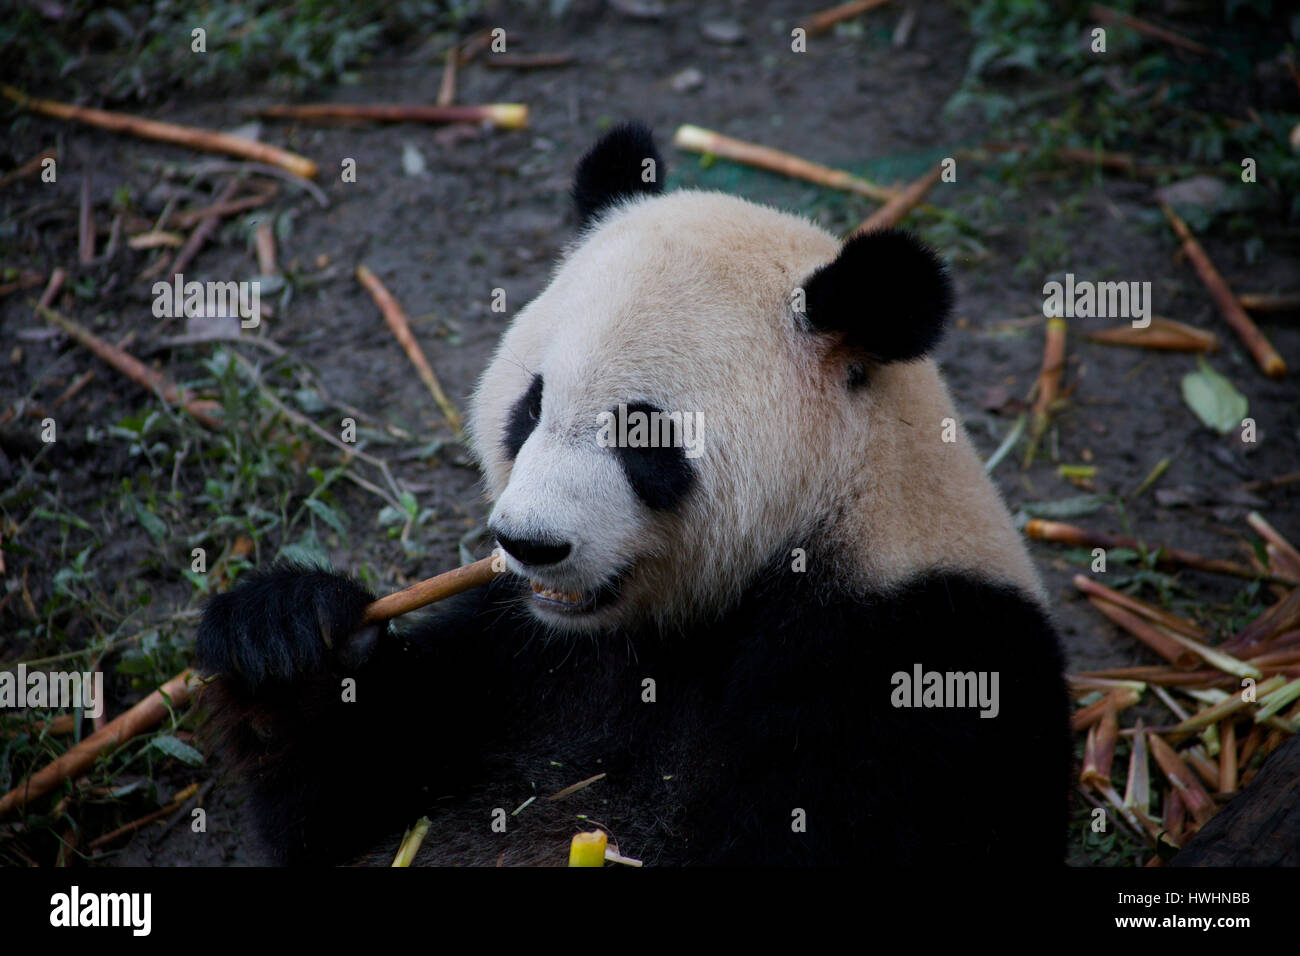 A Giant panda (Ailuropoda melanoleuca) chews on some bamboo at Chengdu Panda Sanctuary in China Stock Photo